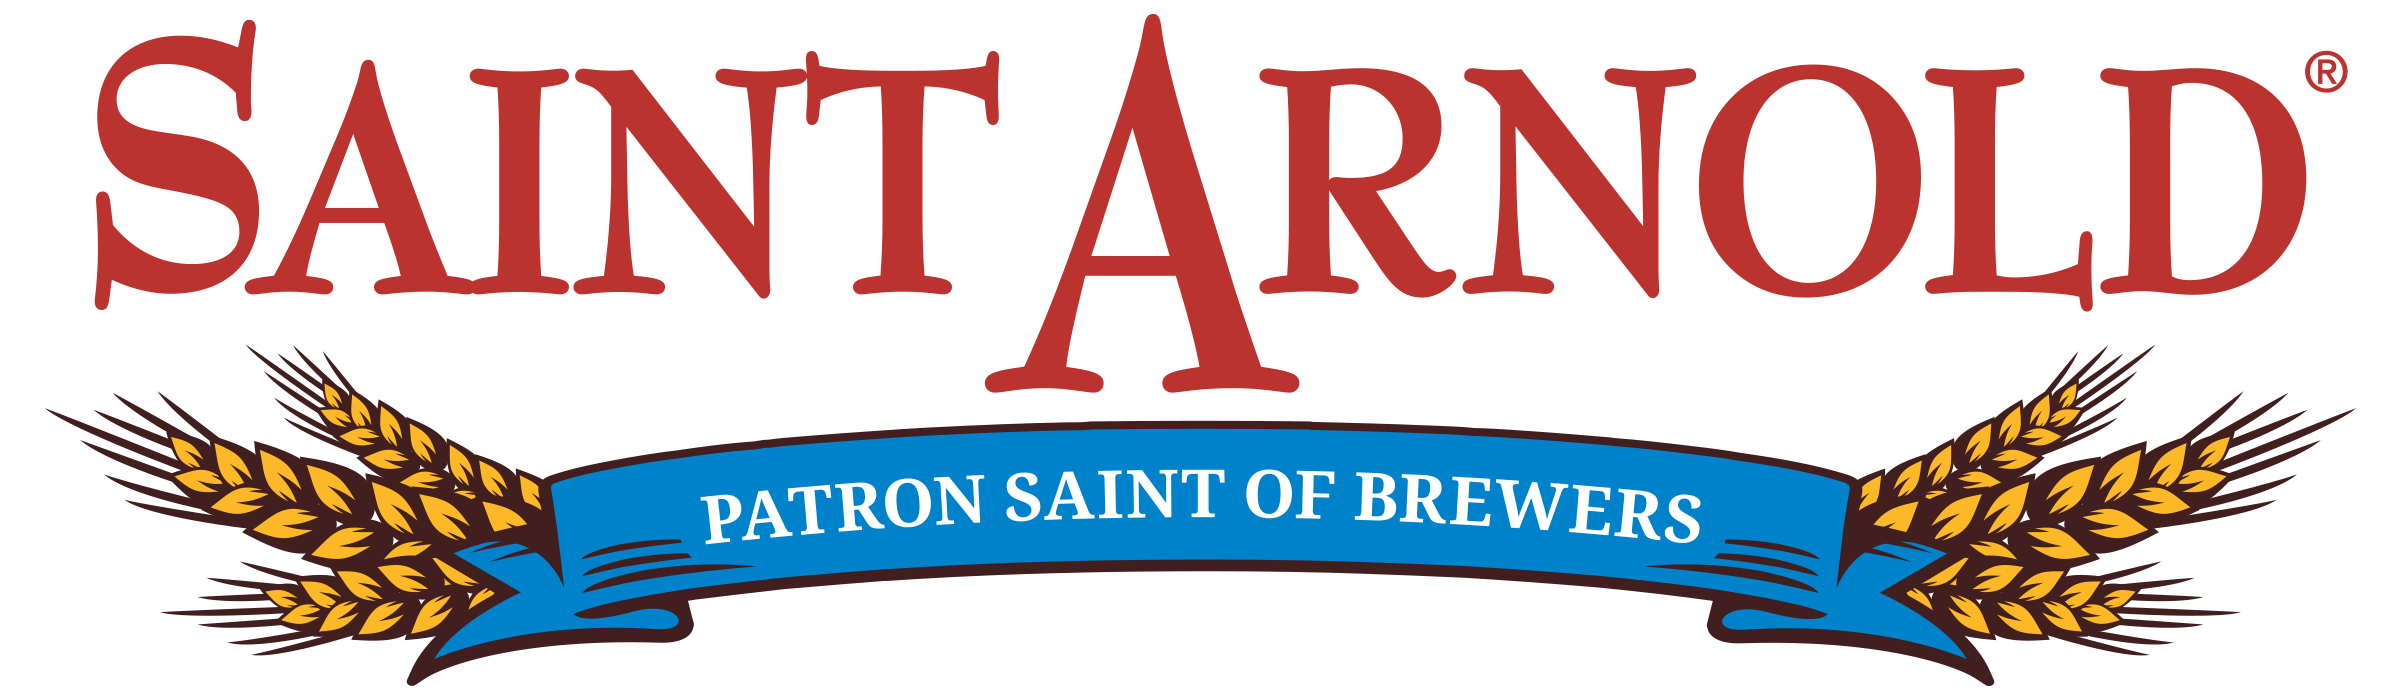 saint_arnold_banner_logo